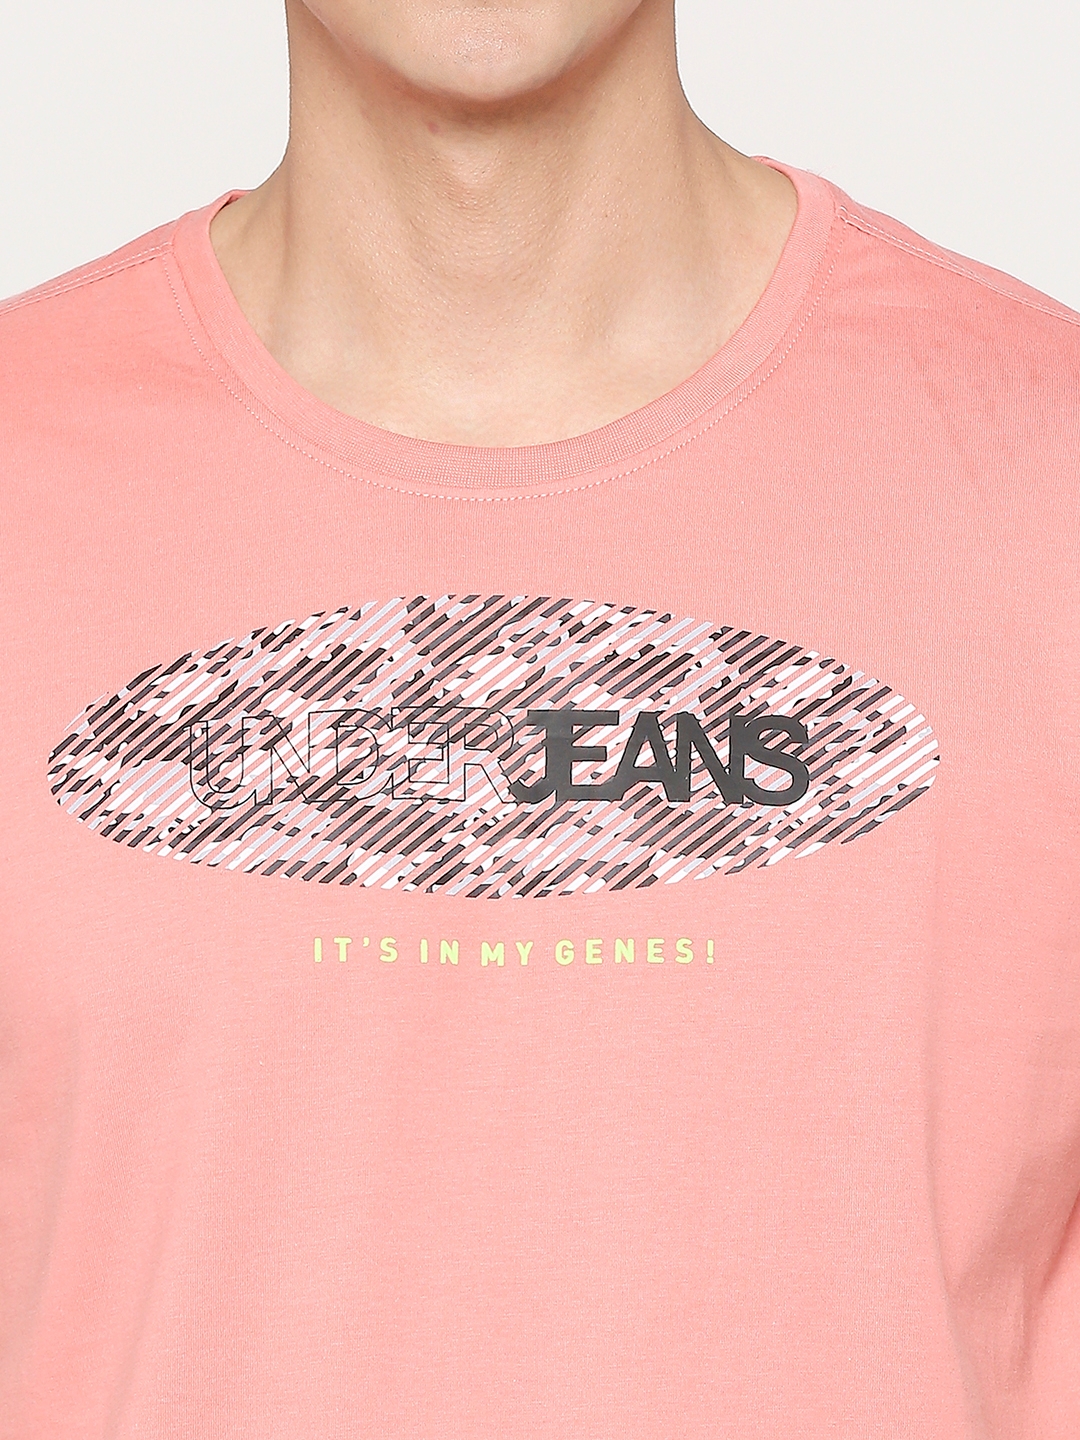 Underjeans by Spykar Men Dusty Coral Cotton Half Sleeve Printed Tshirt